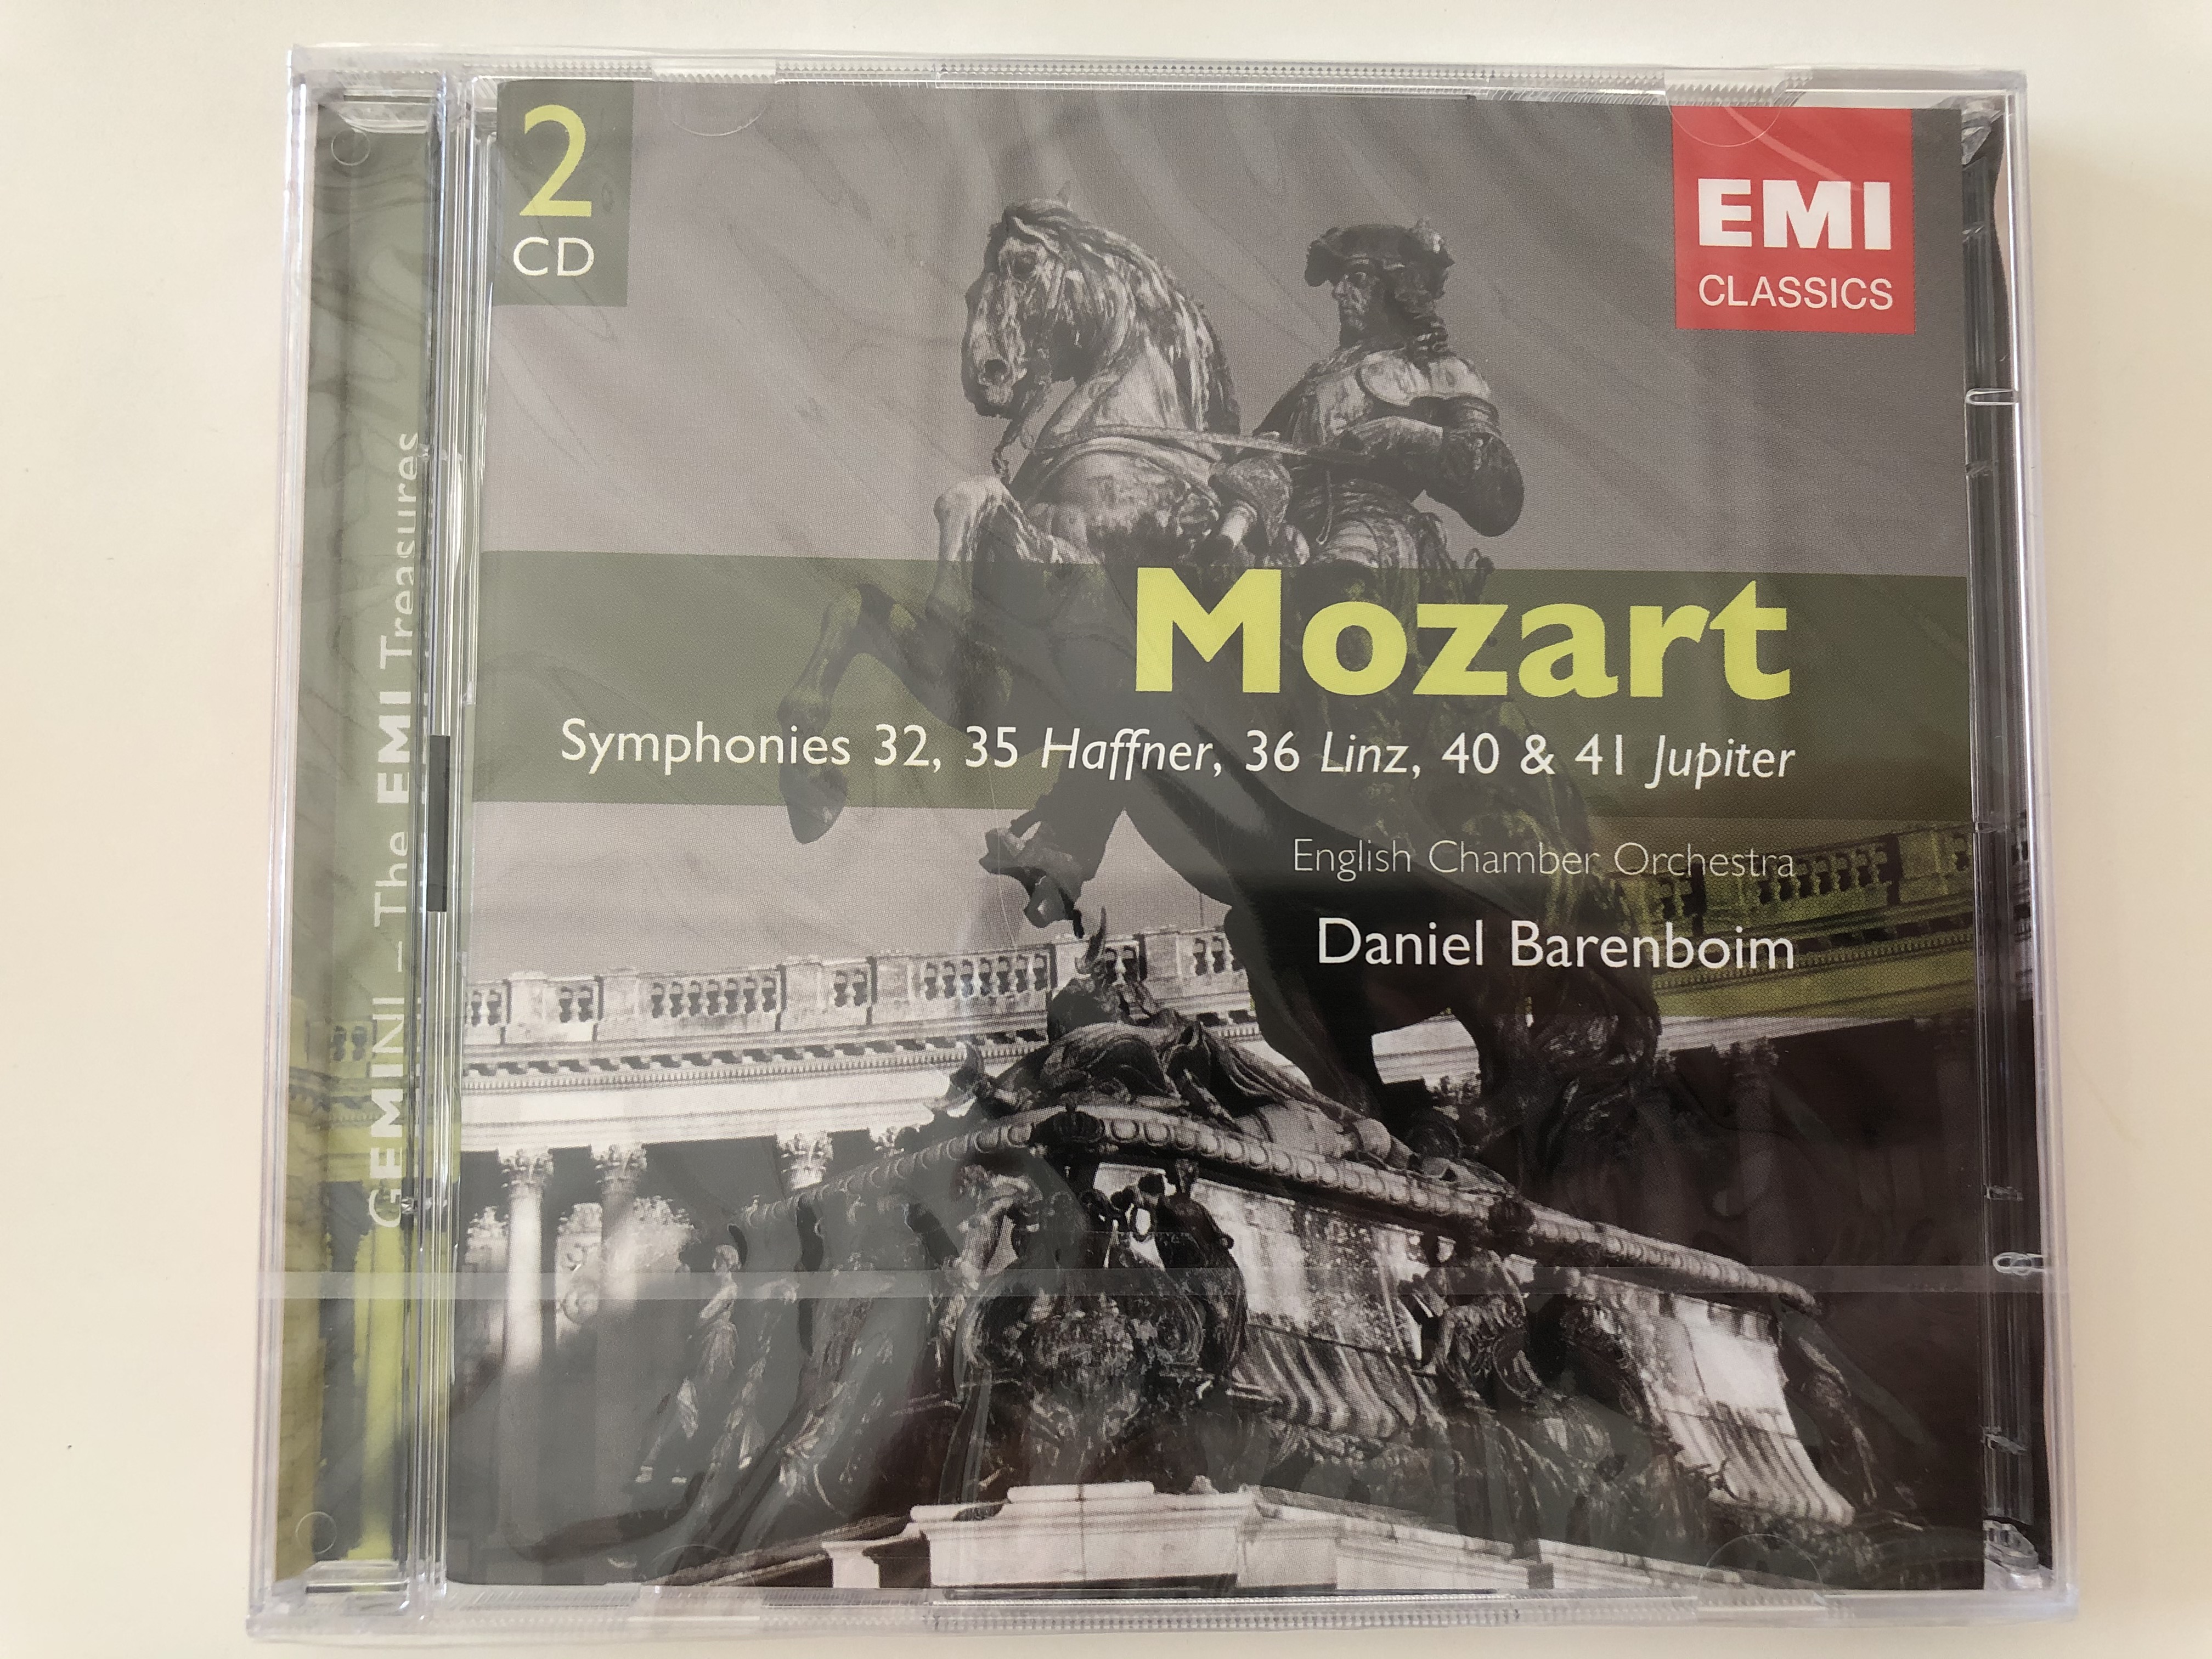 mozart-symphonies-32-35-haffner-36-linz-40-41-jupiter-english-chamber-orchestra-daniel-barenboim-emi-records-2x-audio-cd-2006-stereo-094635092226-1-.jpg